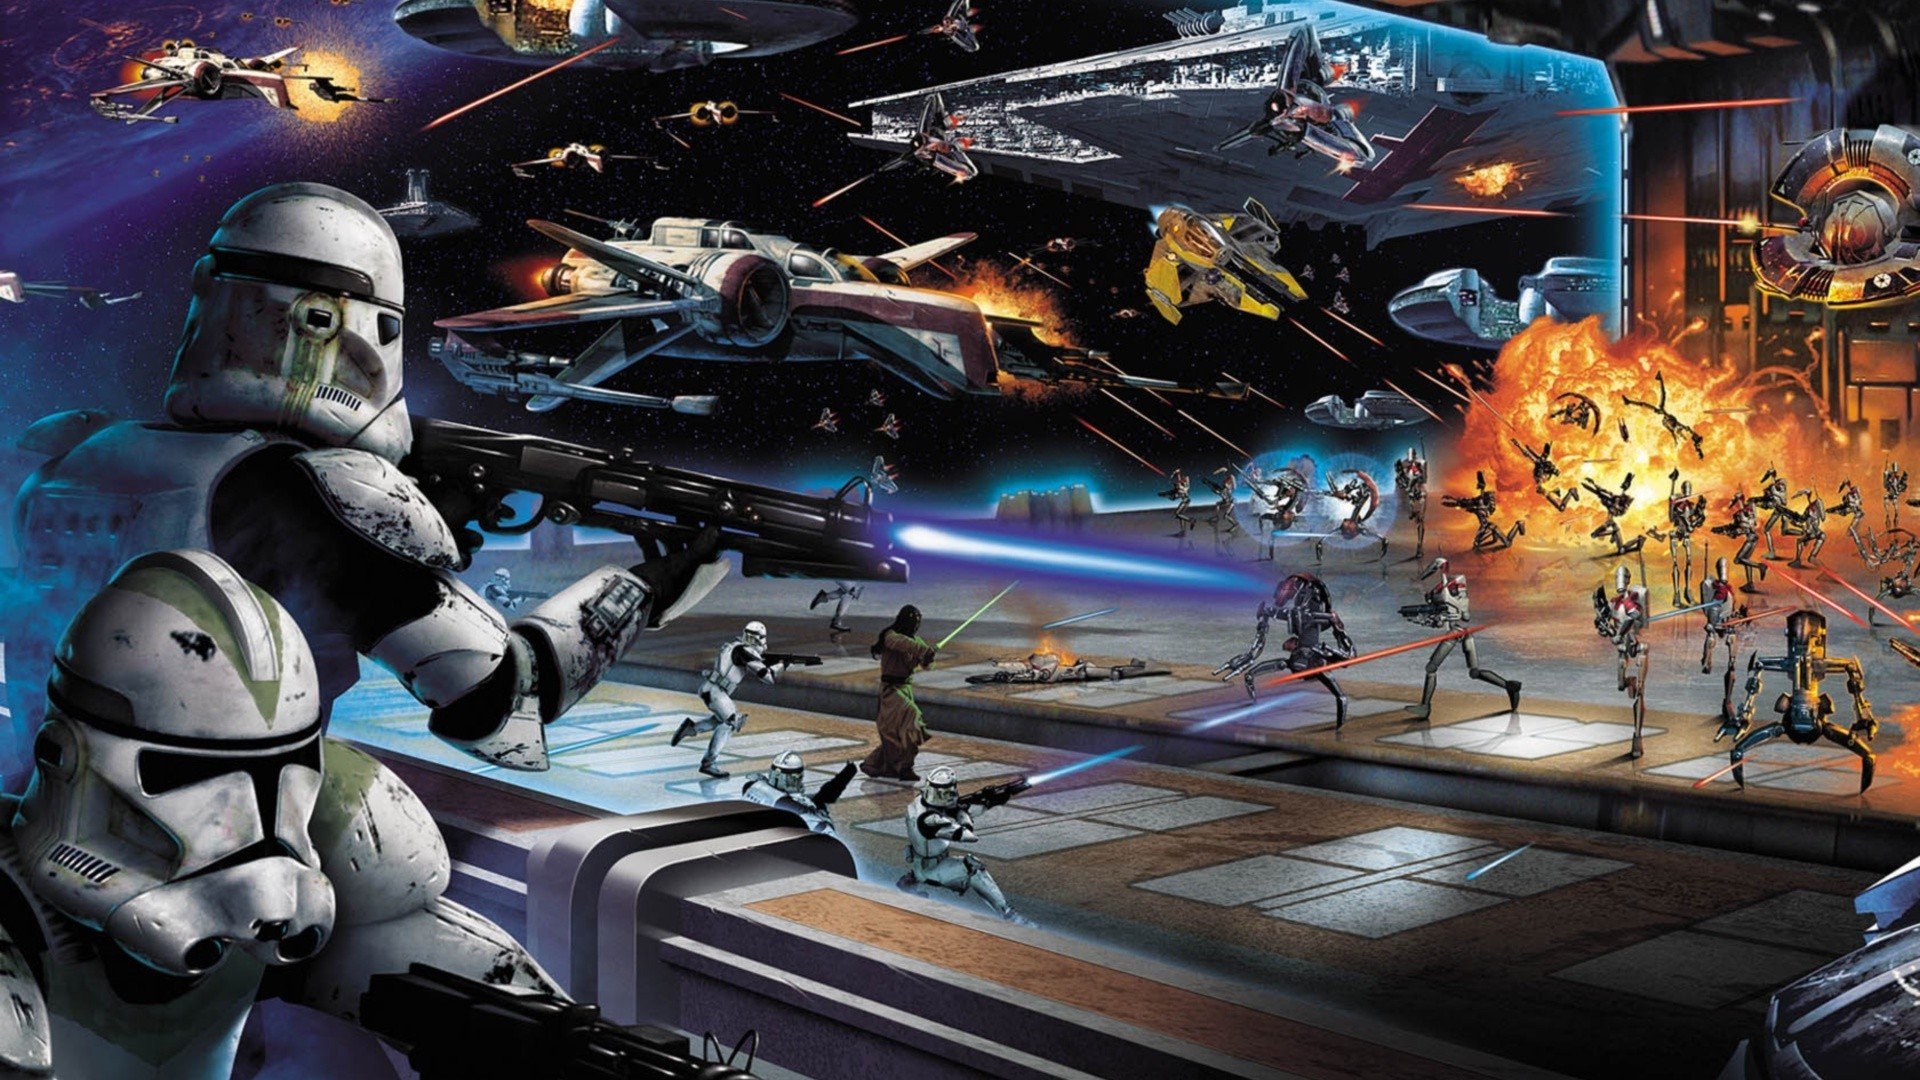 star wars battlefront 2 wallpaper